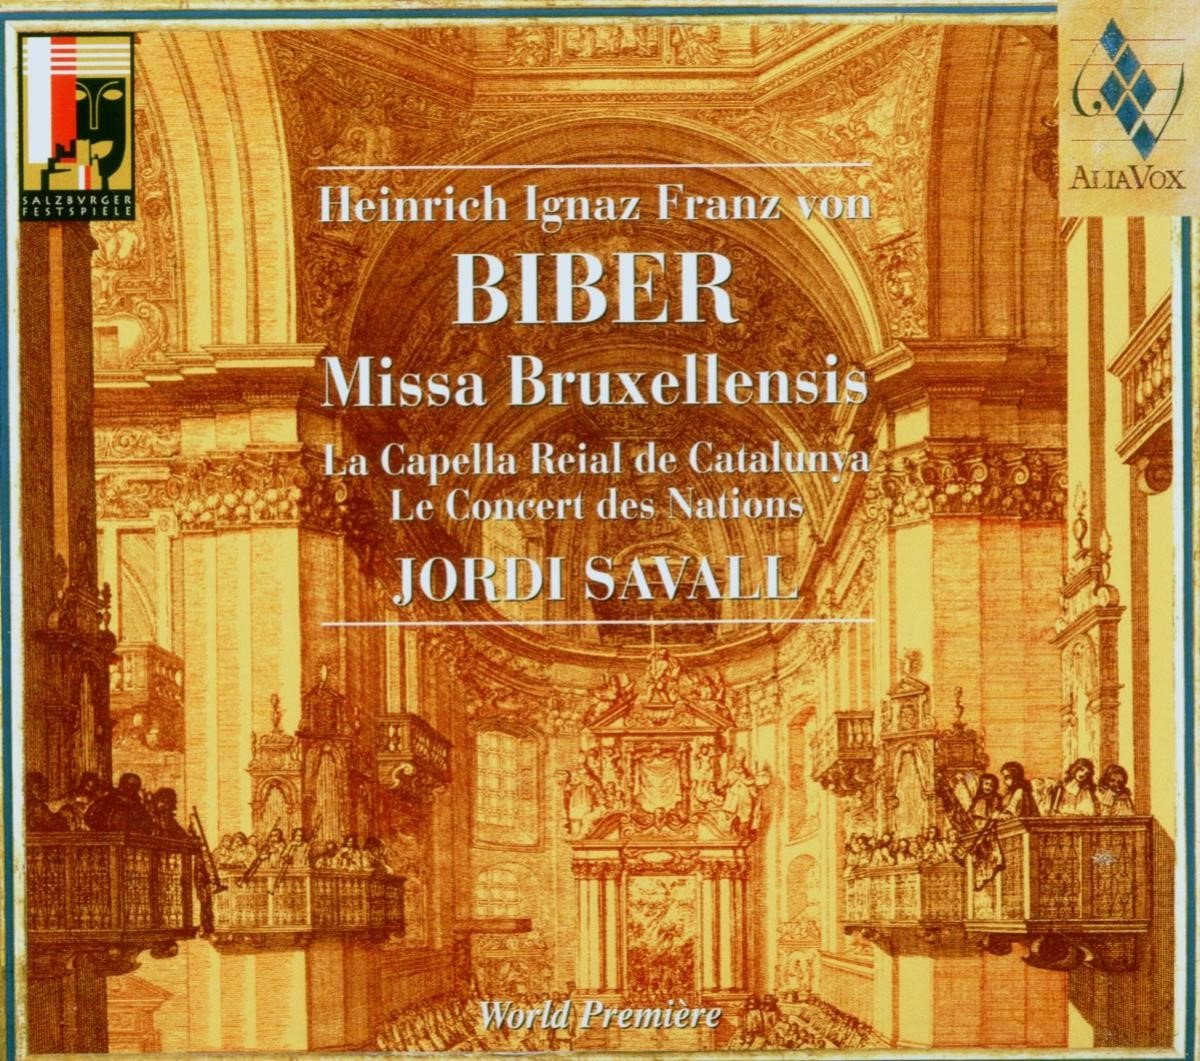 Jordi Savall & La Capella Rei - Missa Bruxellensis World Prem (CD) - Jordi Savall & La Capella Rei